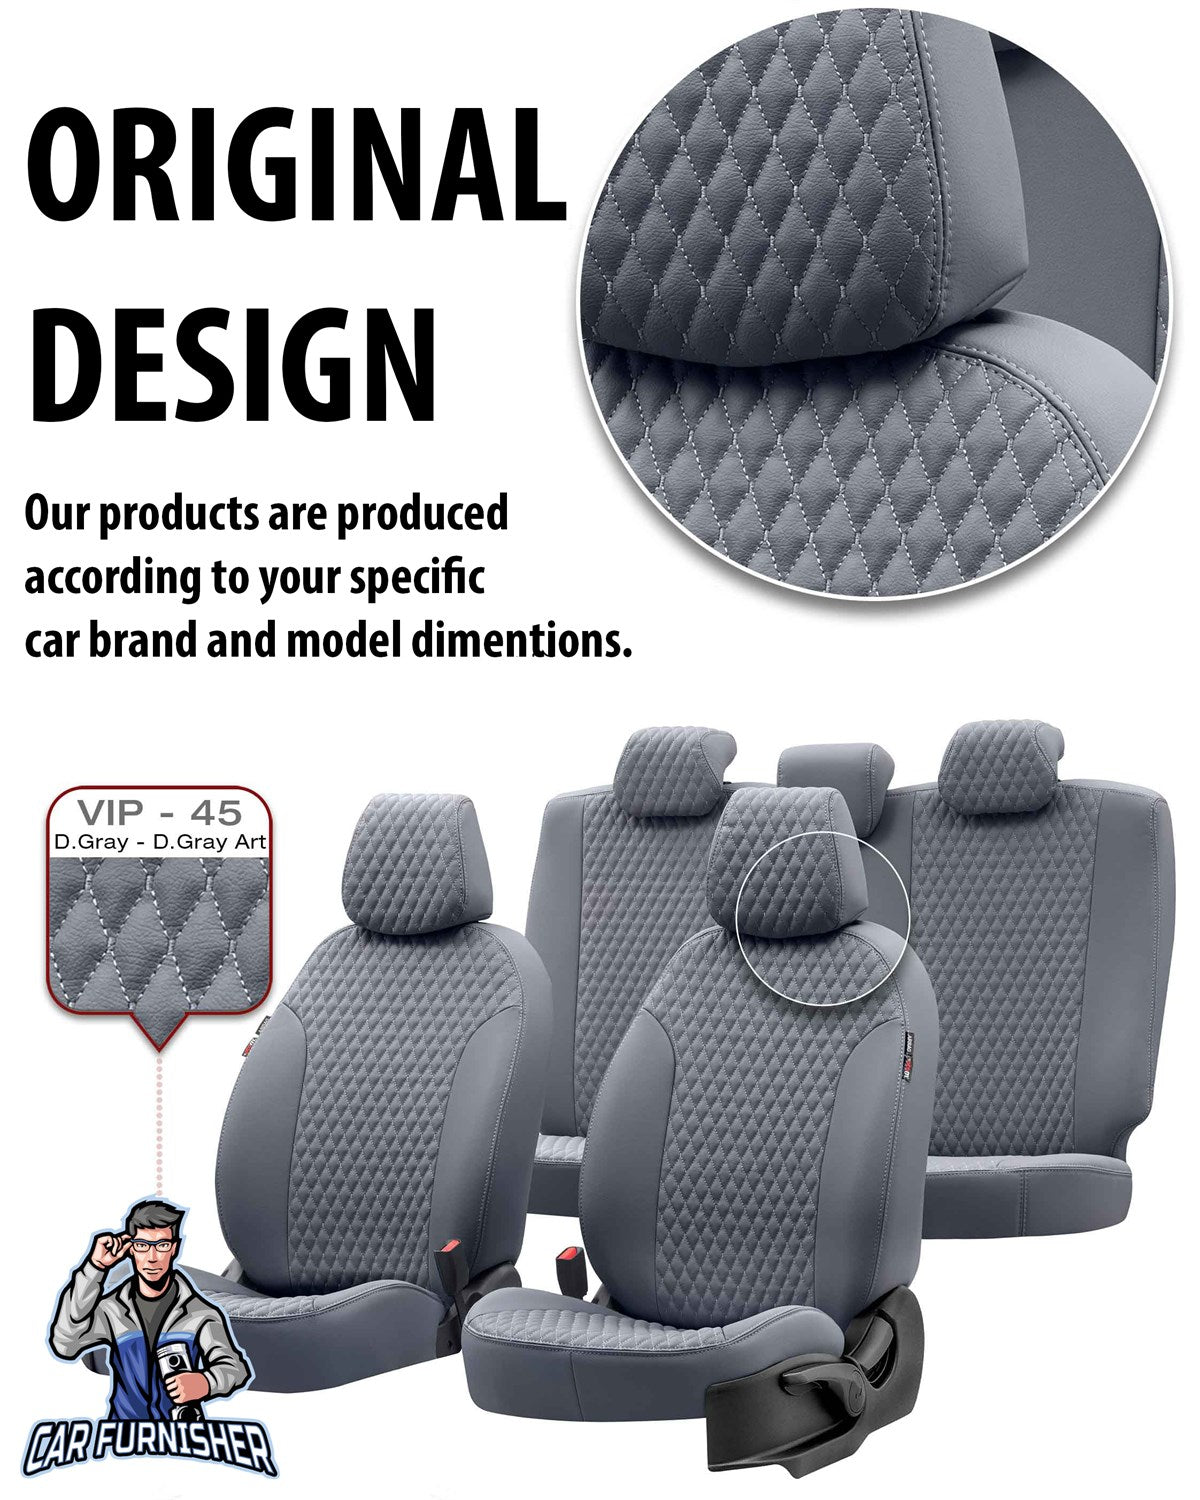 Mitsubishi Attrage Seat Covers Amsterdam Leather Design Smoked Black Leather